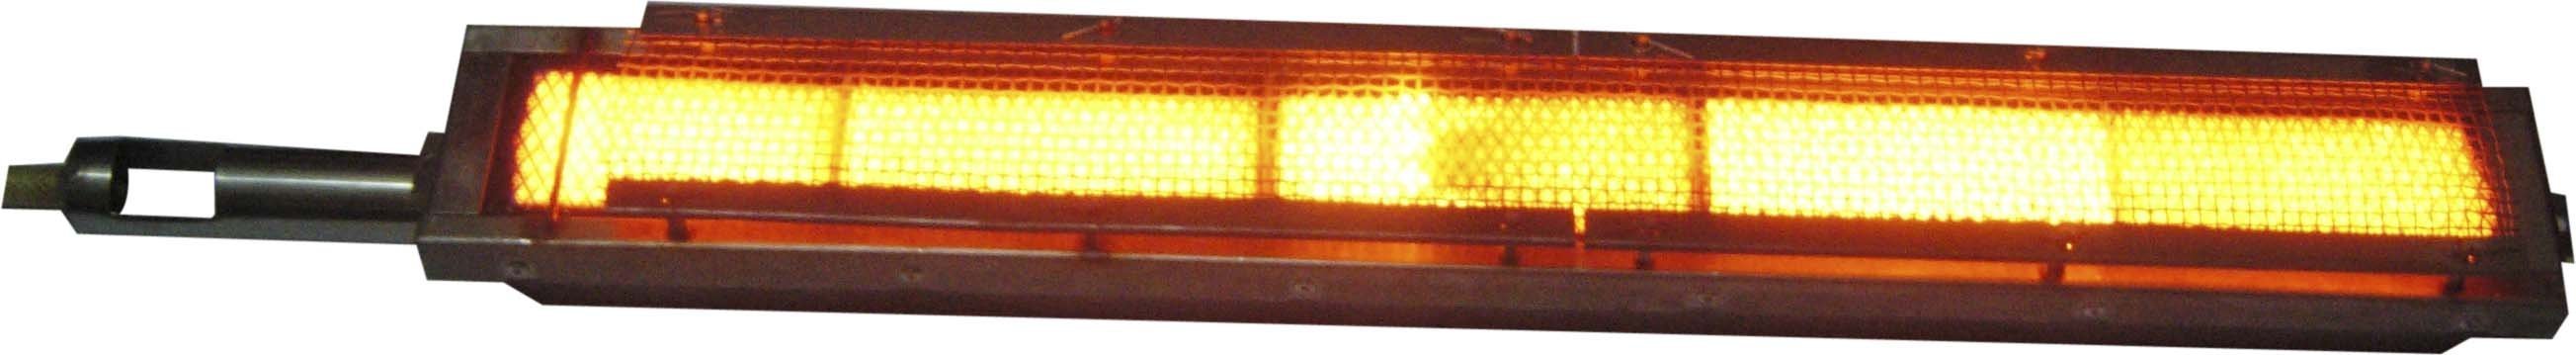 BBQ infrared burner HD668